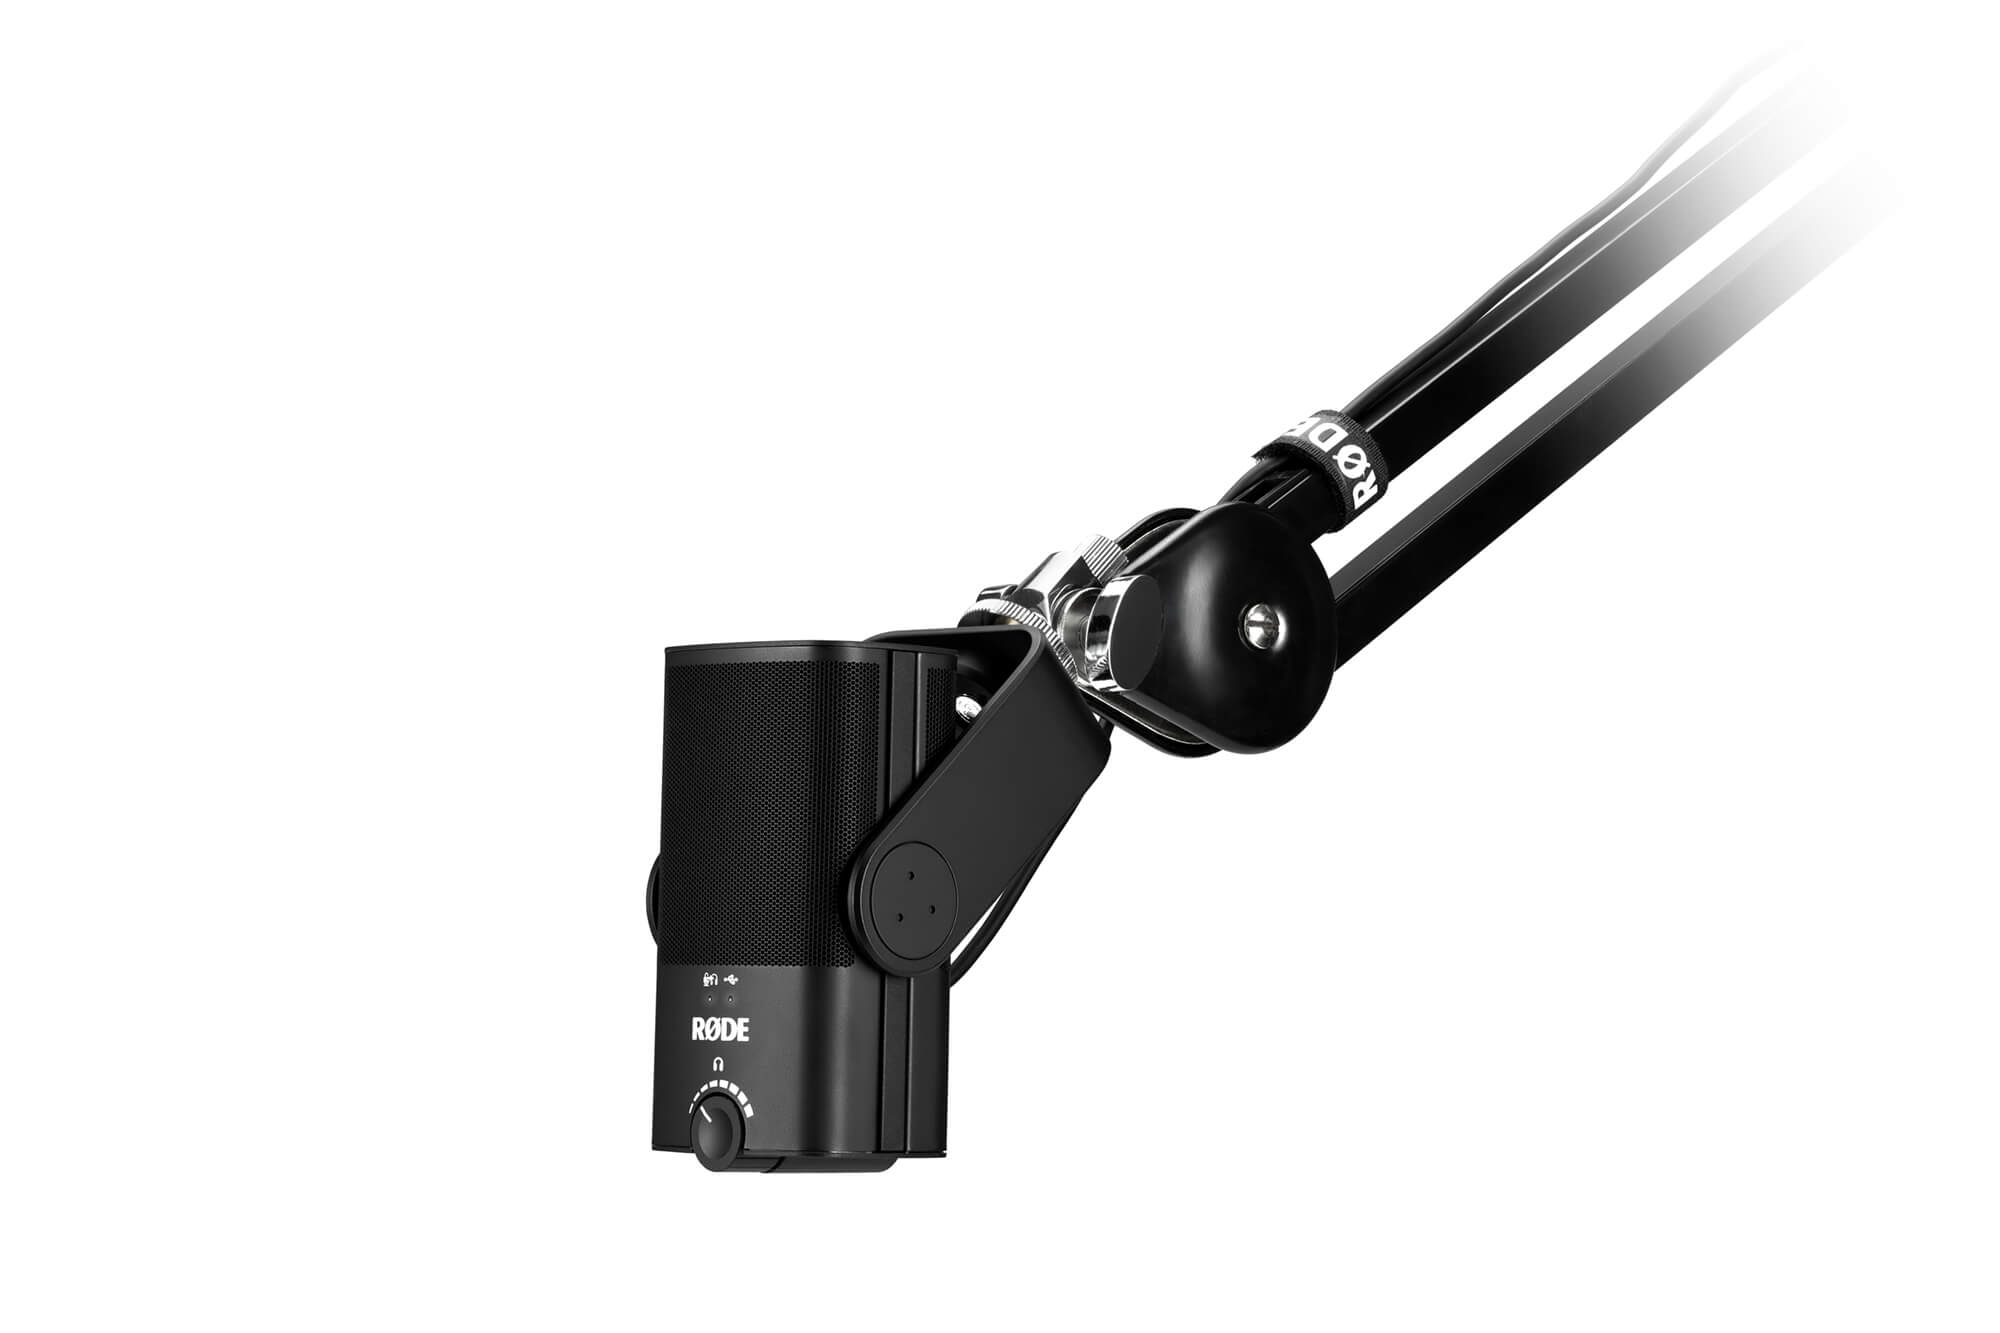 NT-USB MIni mounted to PSA1 on white background